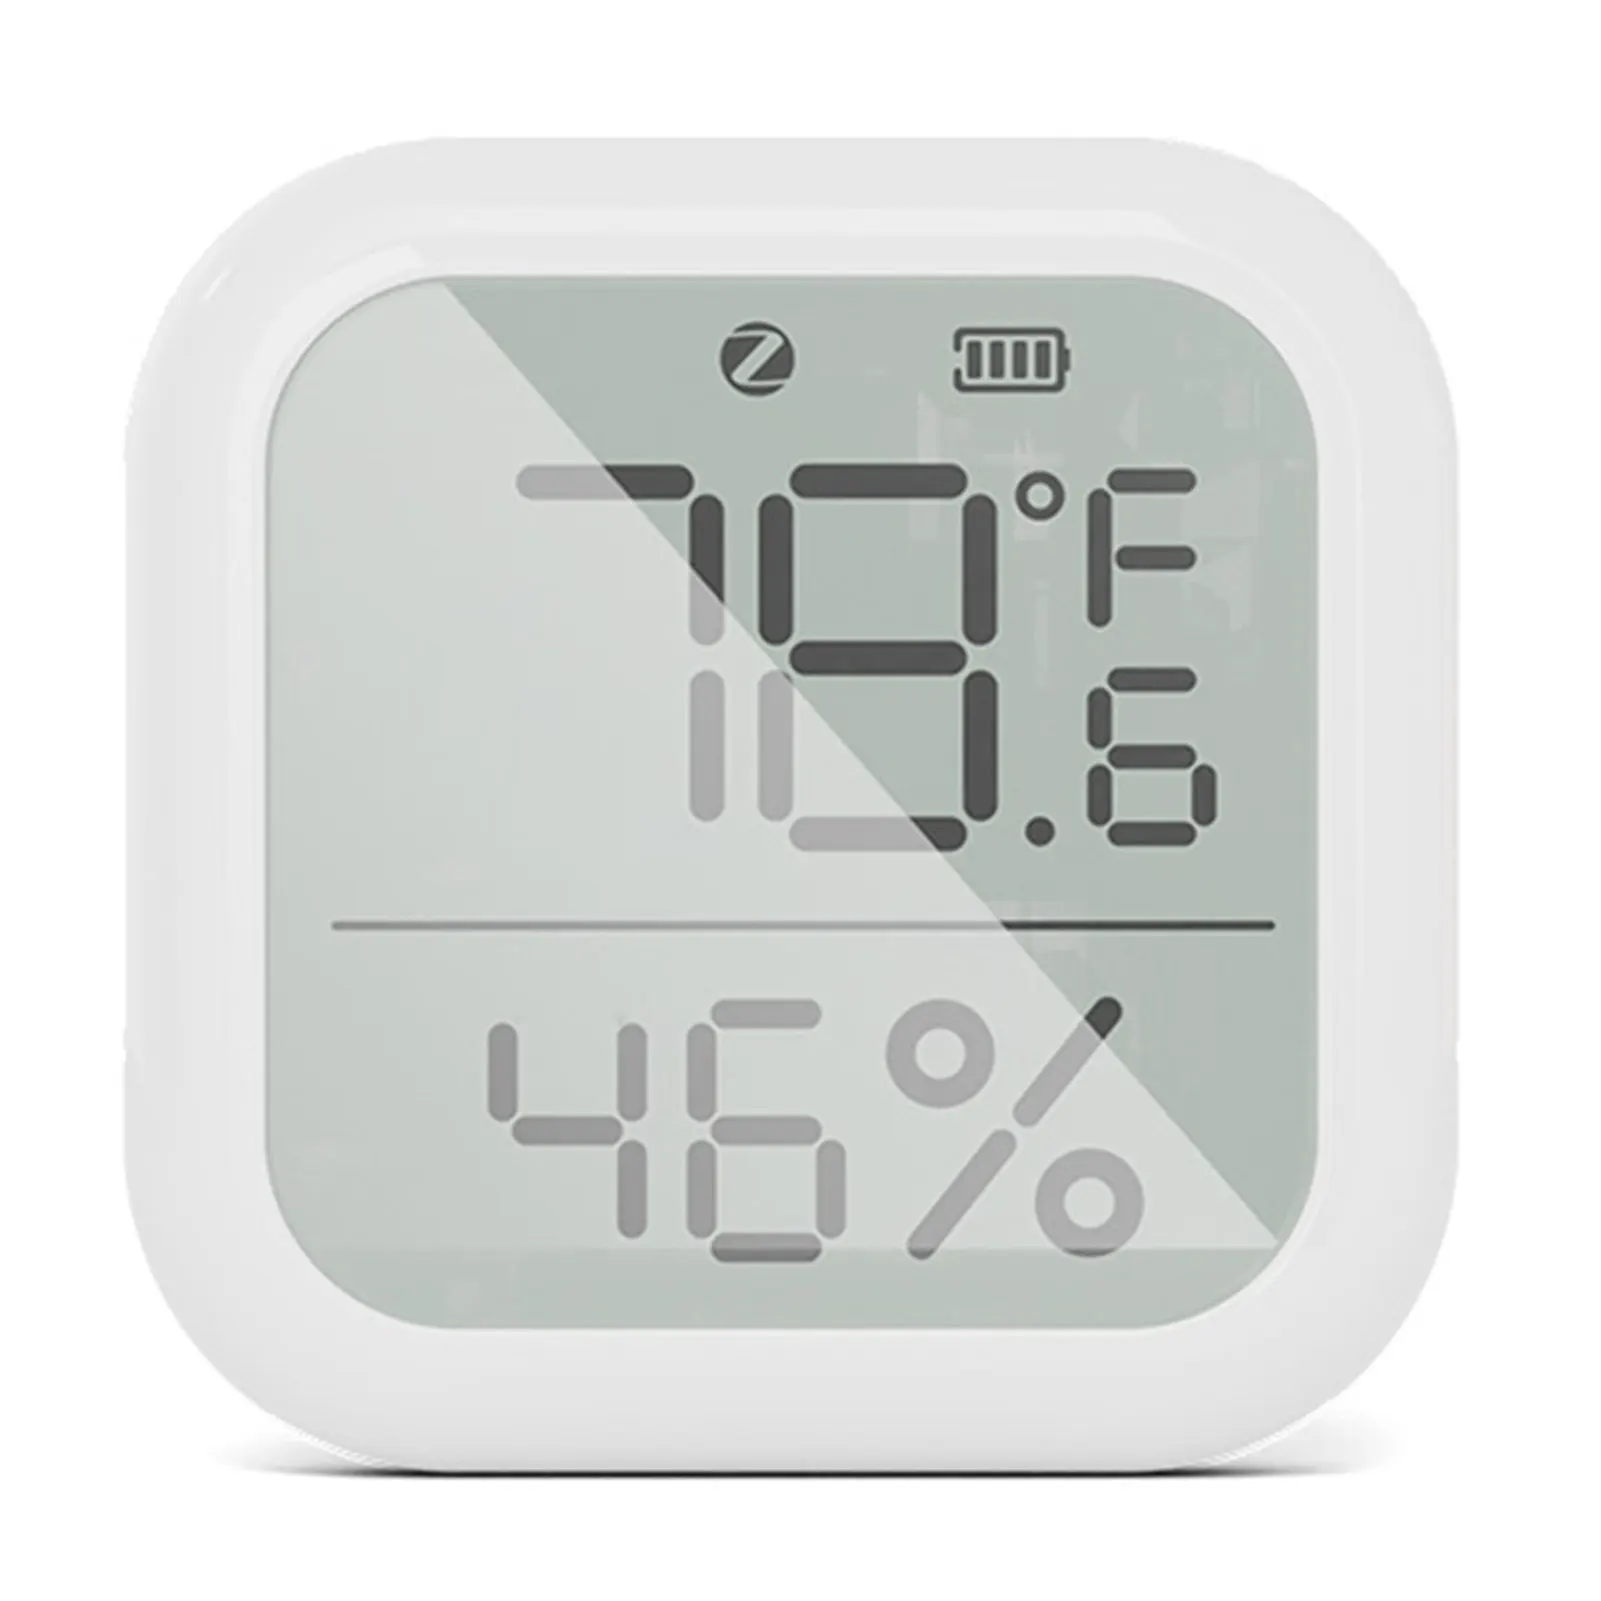 

Digital Smart Thermo-hygrometer Sensor Practical Humidity Meter And Temperature Sensor For Home Garage Greenhouse Cellar